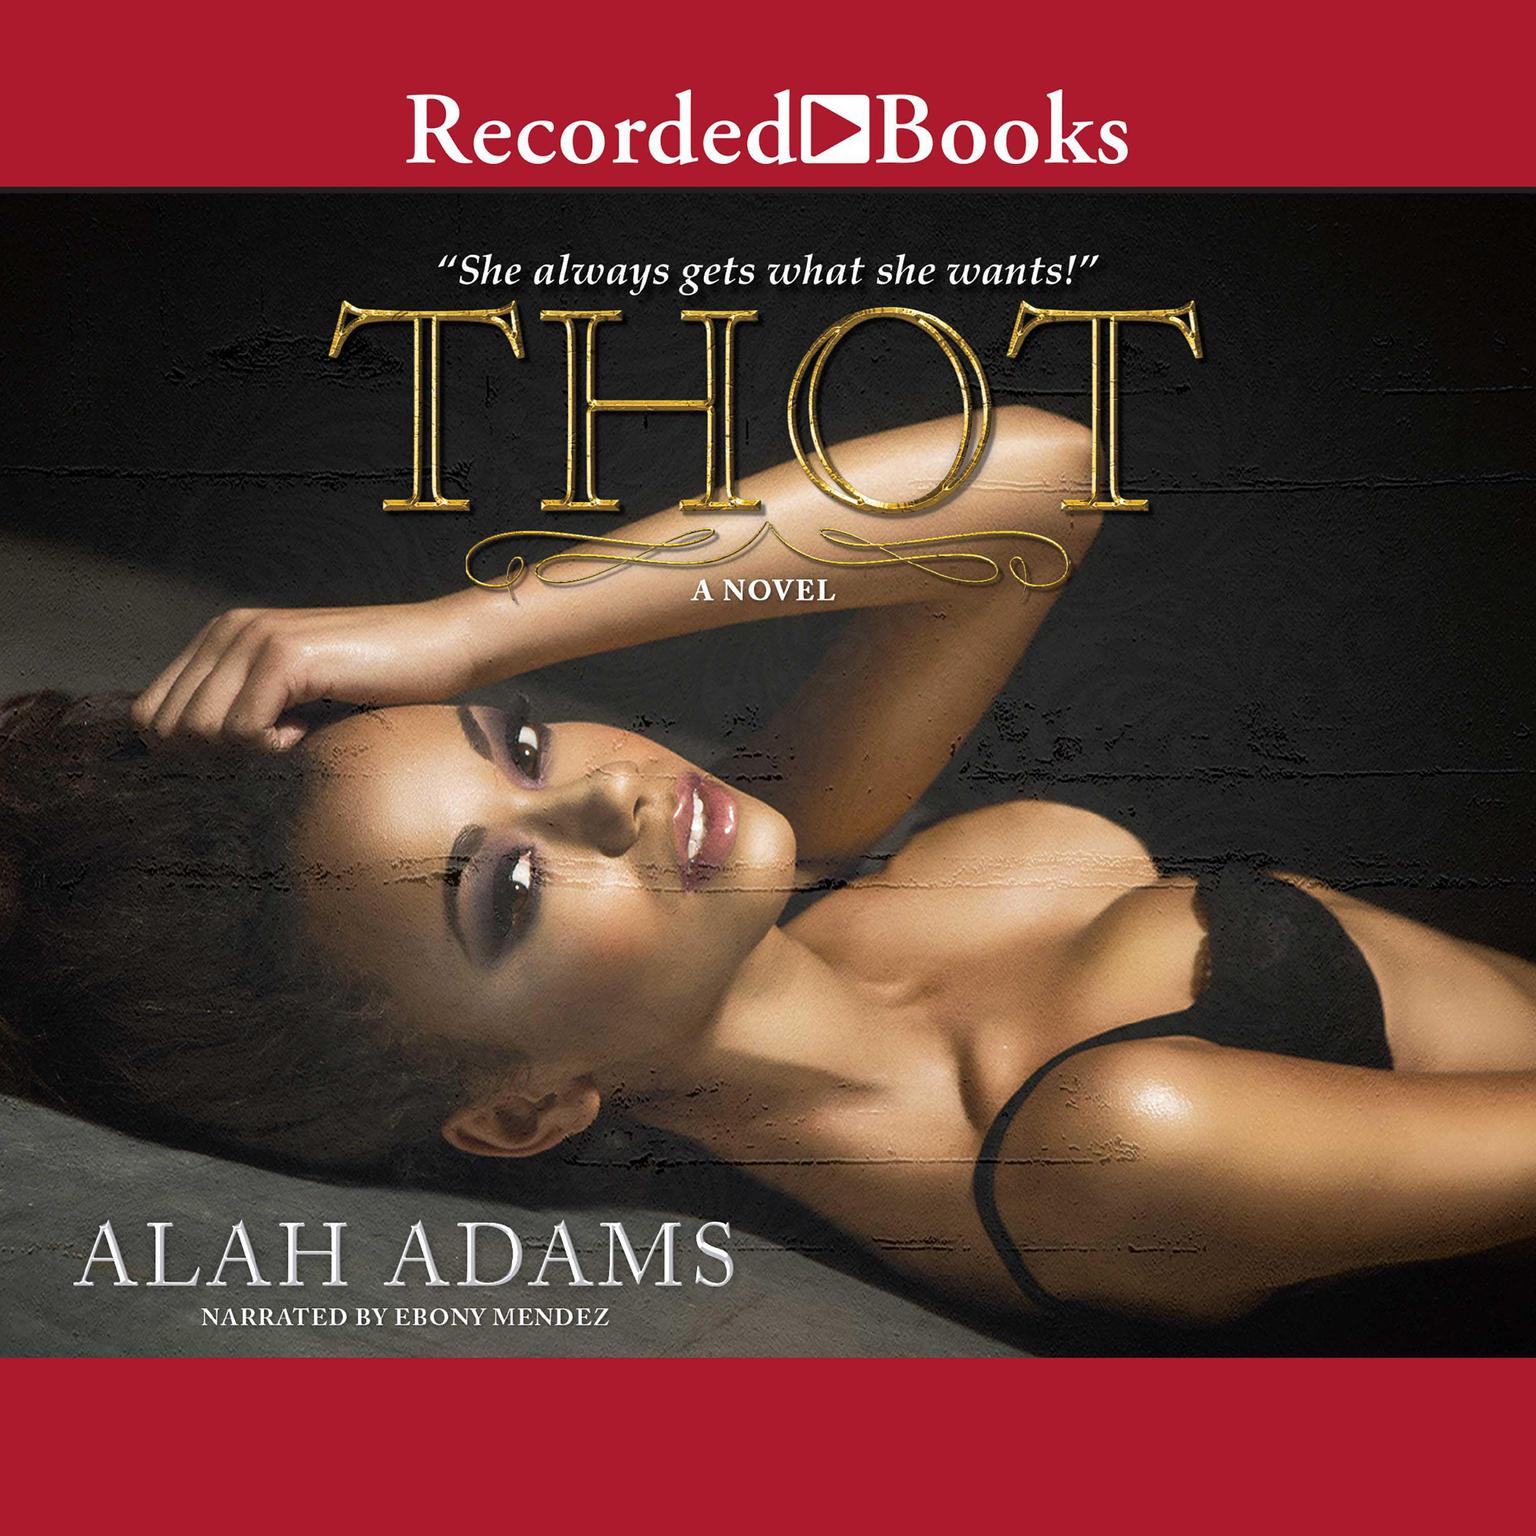 THOT Audiobook, by Alah Adams